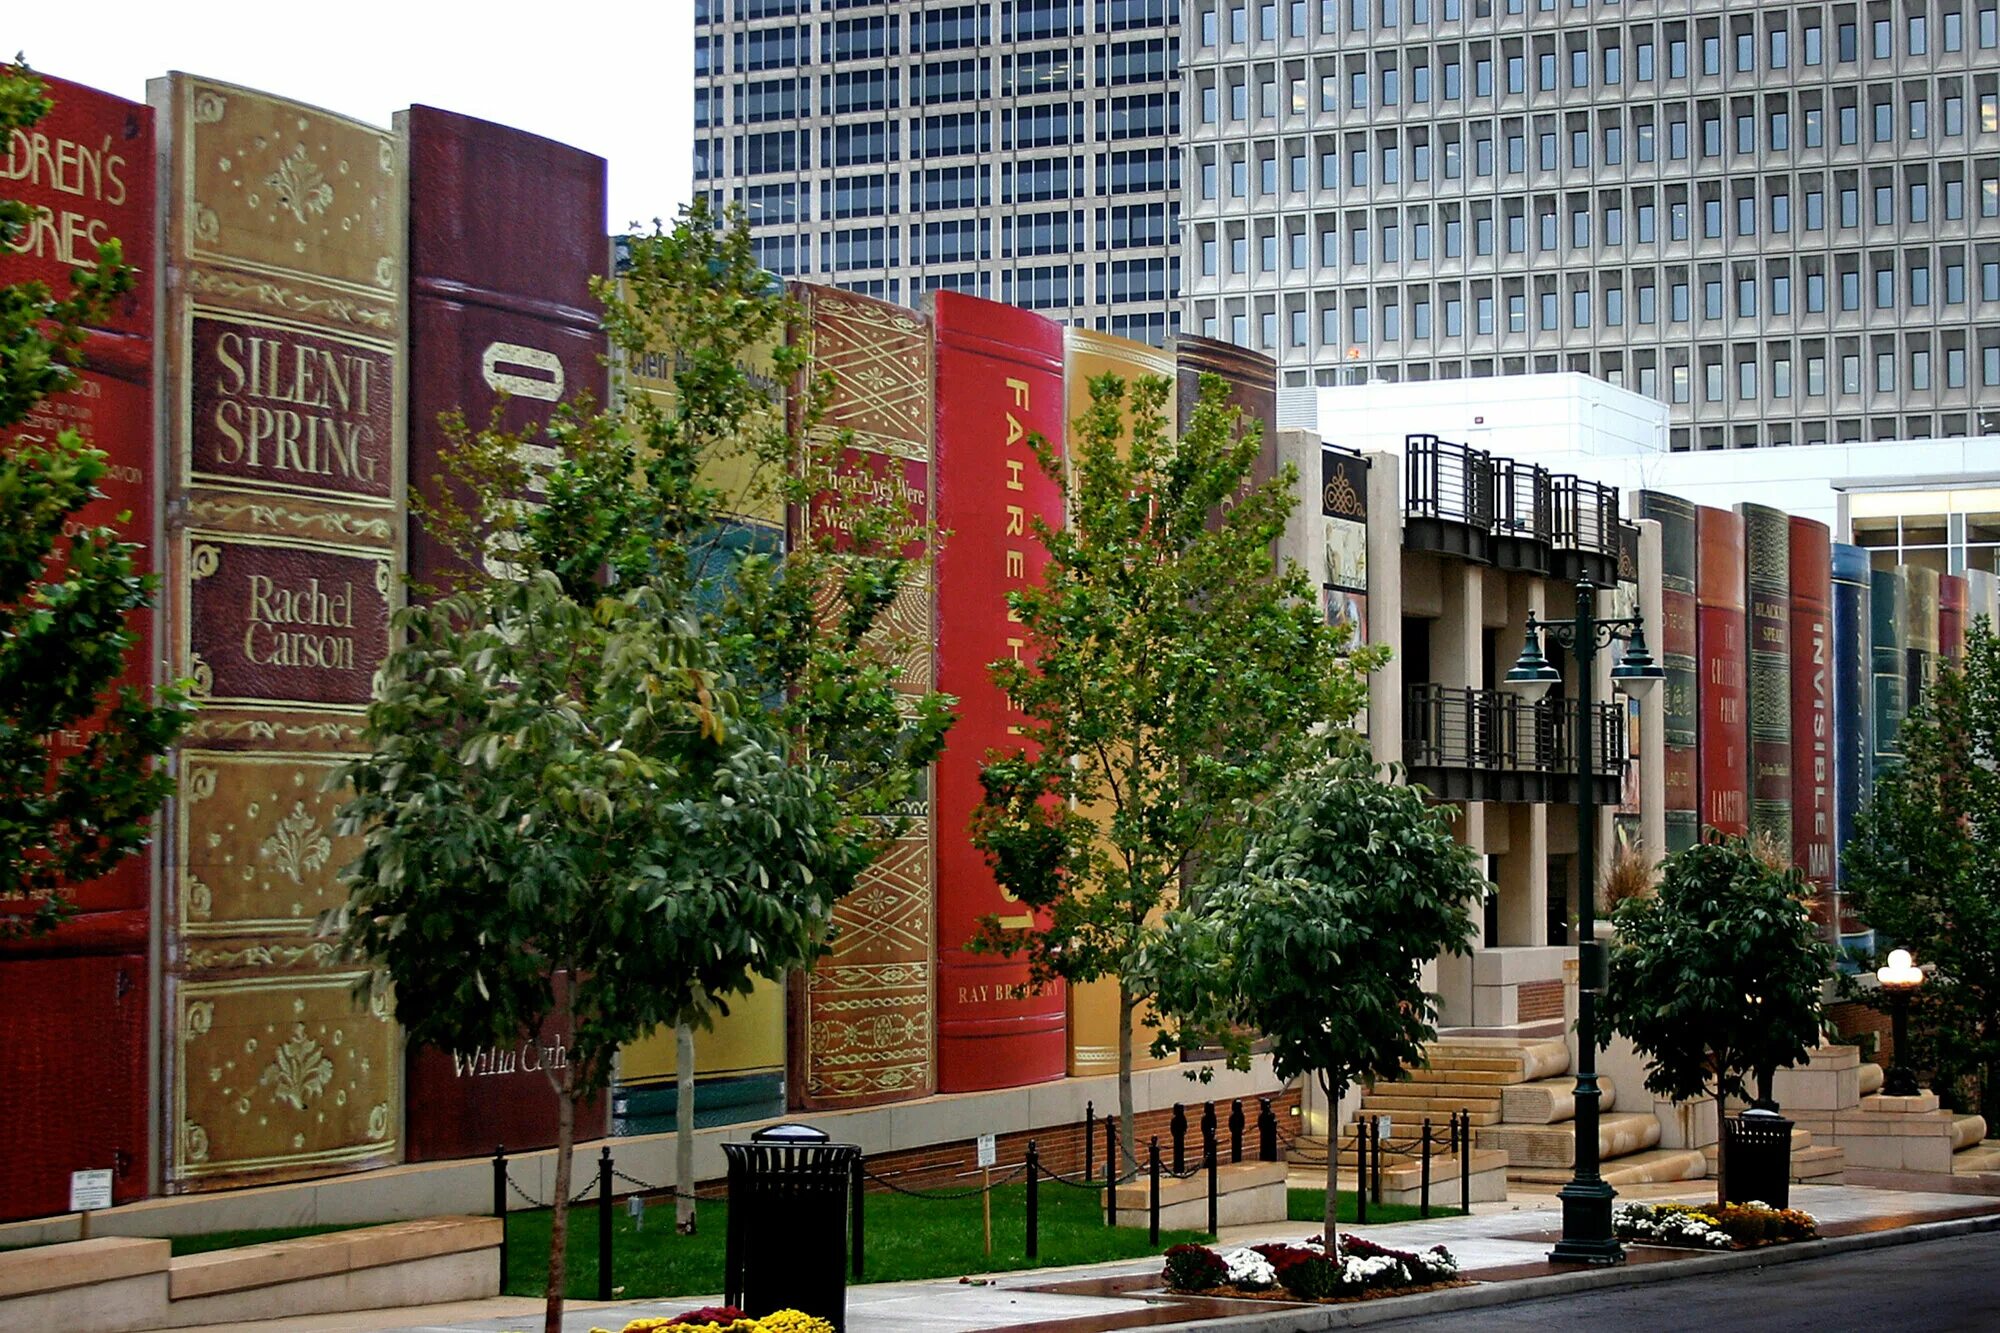 City library. Центральная библиотека Канзас-Сити. Штат Миссури. Публичная библиотека в Канзас Сити штат Миссури США. Публичная библиотека города Канзас (Kansas City public Library). Здание библиотеки в Канзас Сити США.